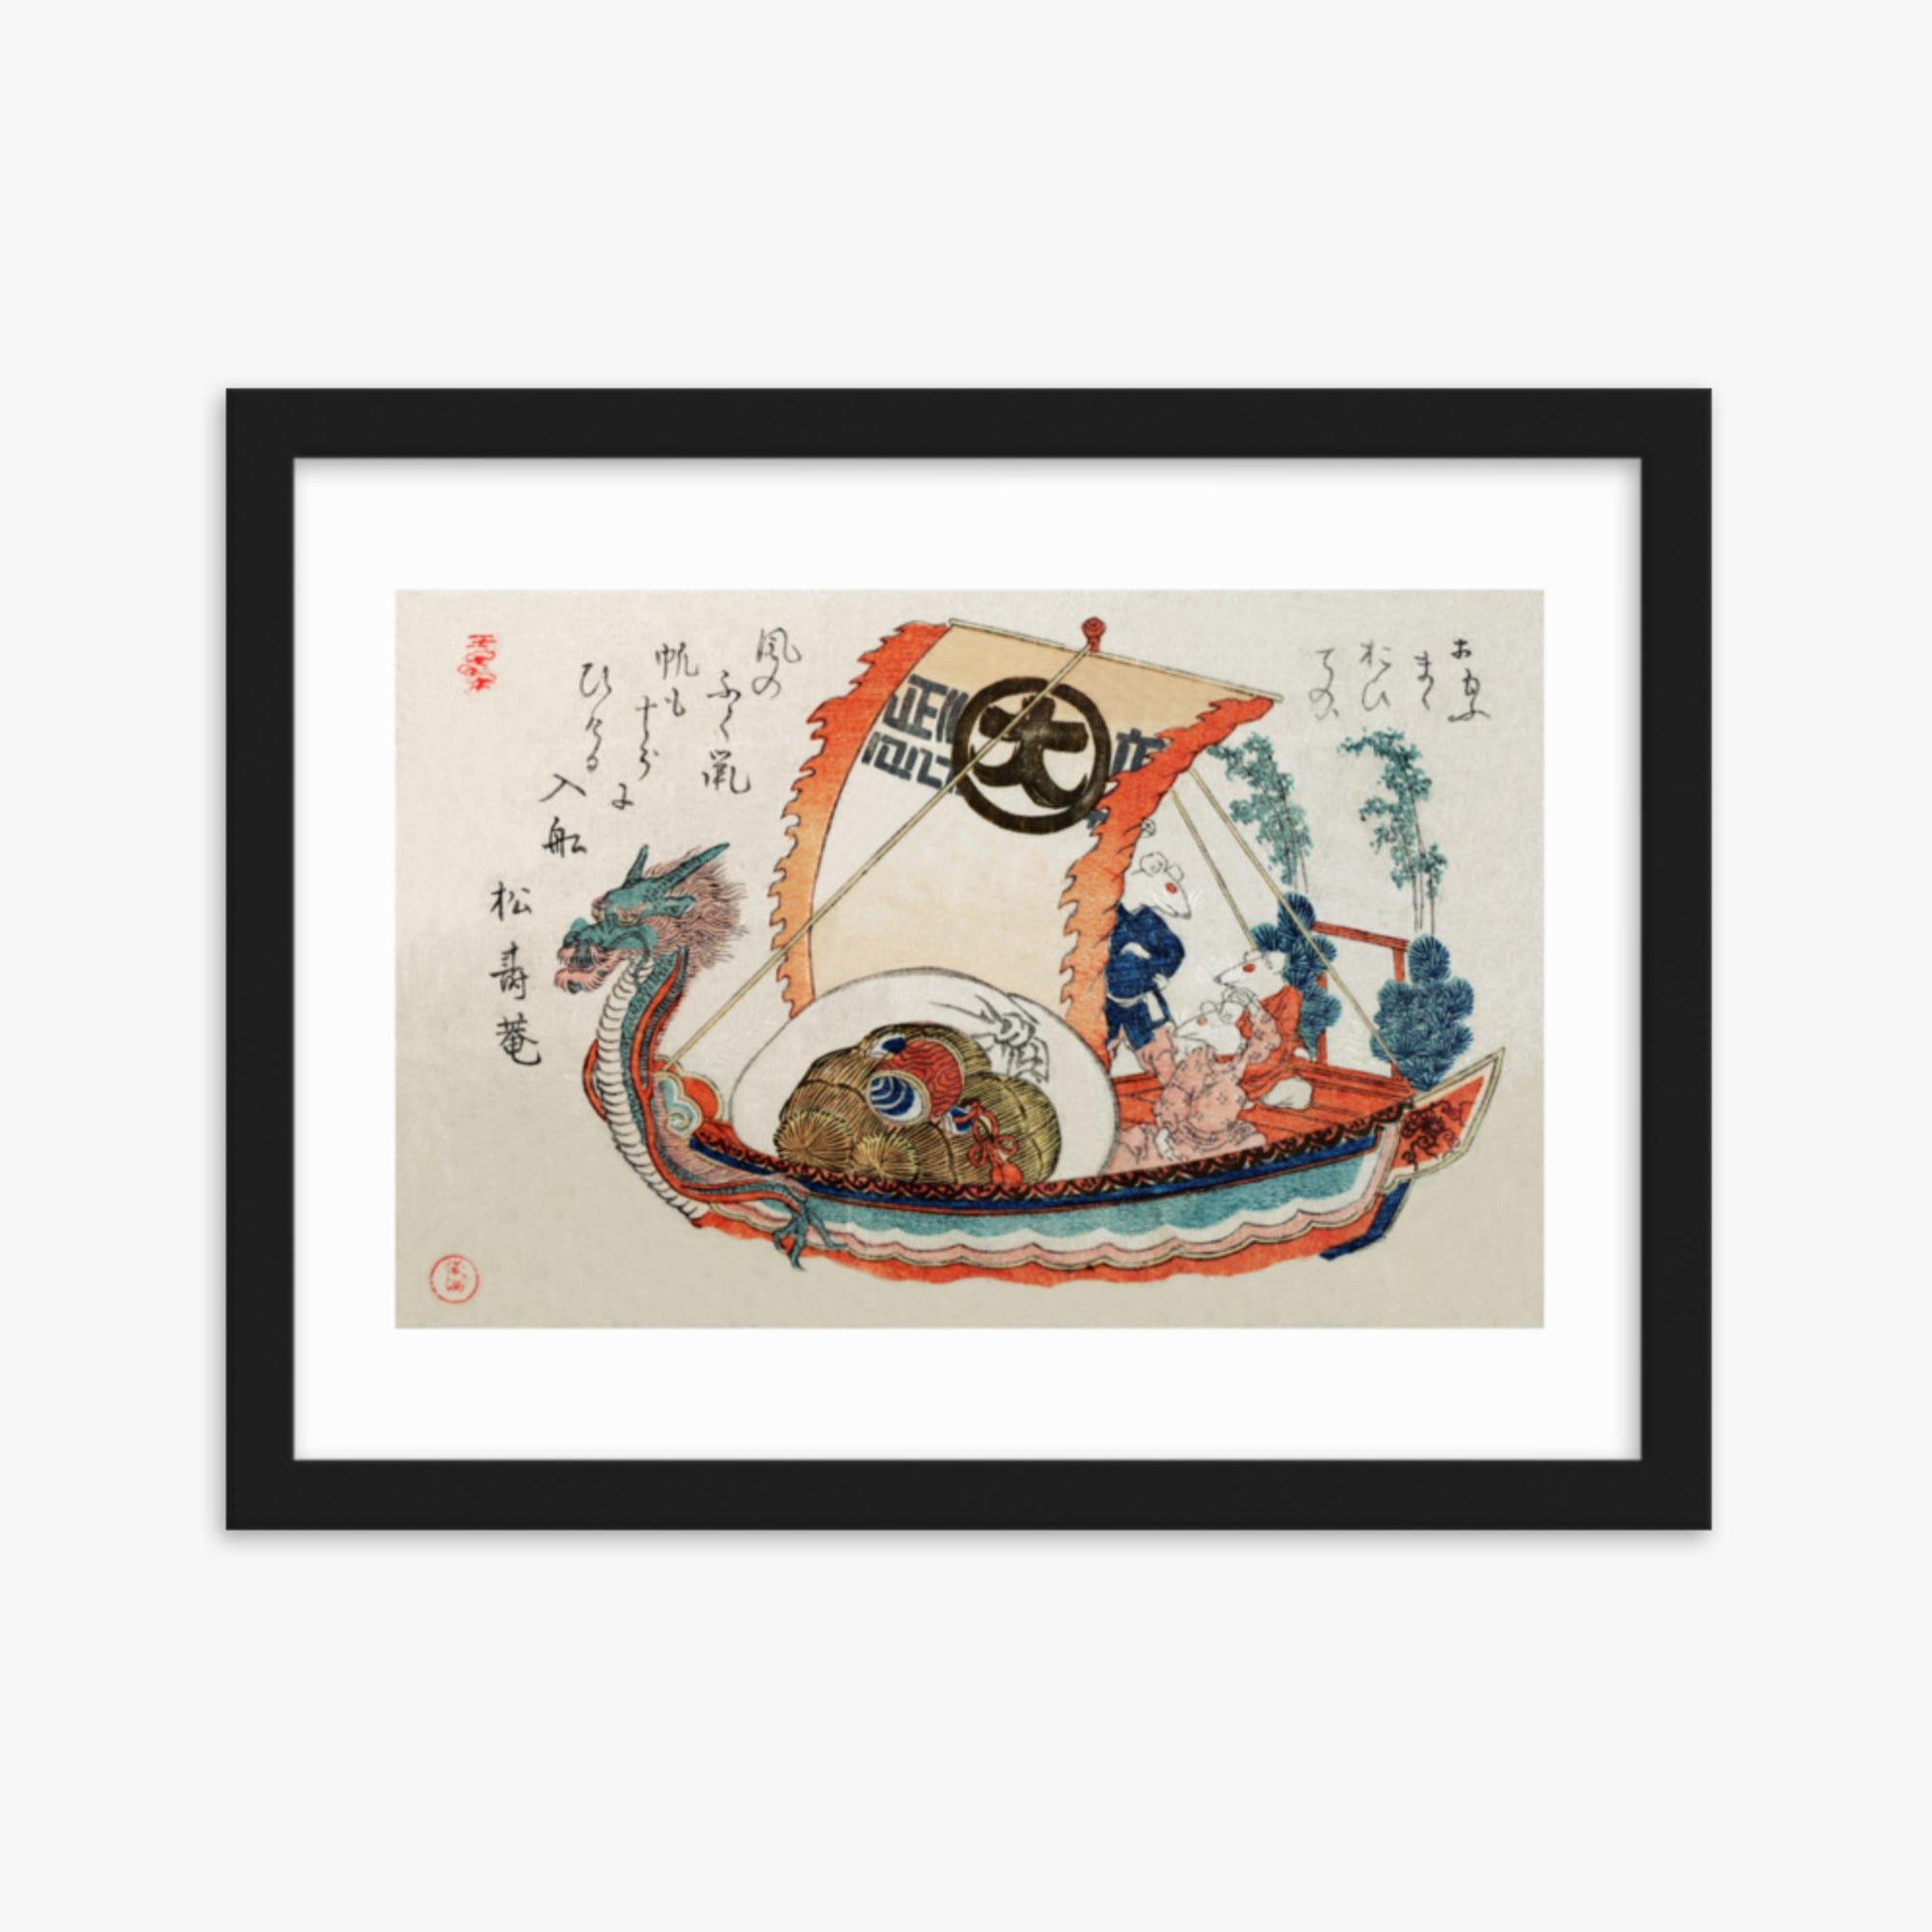 Kubo Shunman - Treasure Boat (Takara-bune) with Three Rats 30x40 cm Poster With Black Frame